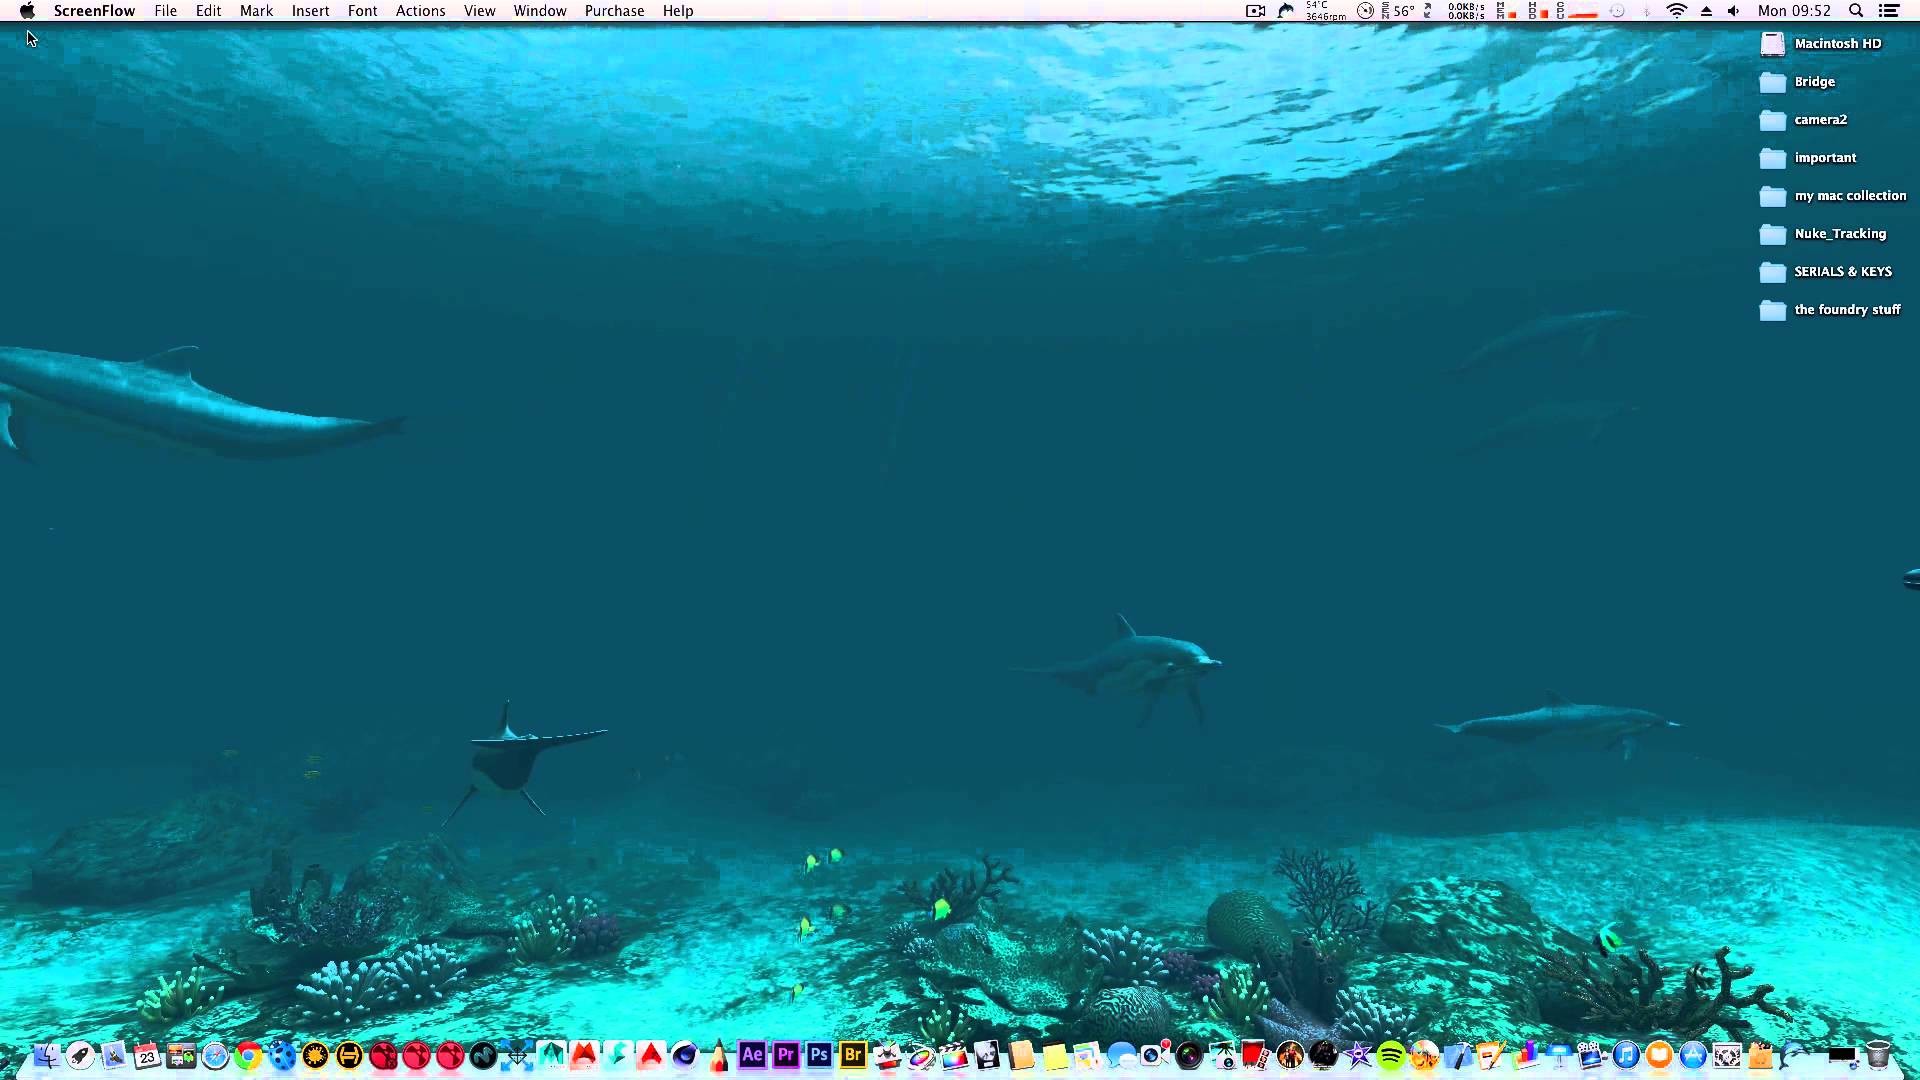 fonds d'écran hd pour mac,sous marin,biologie marine,poisson,aqua,océan